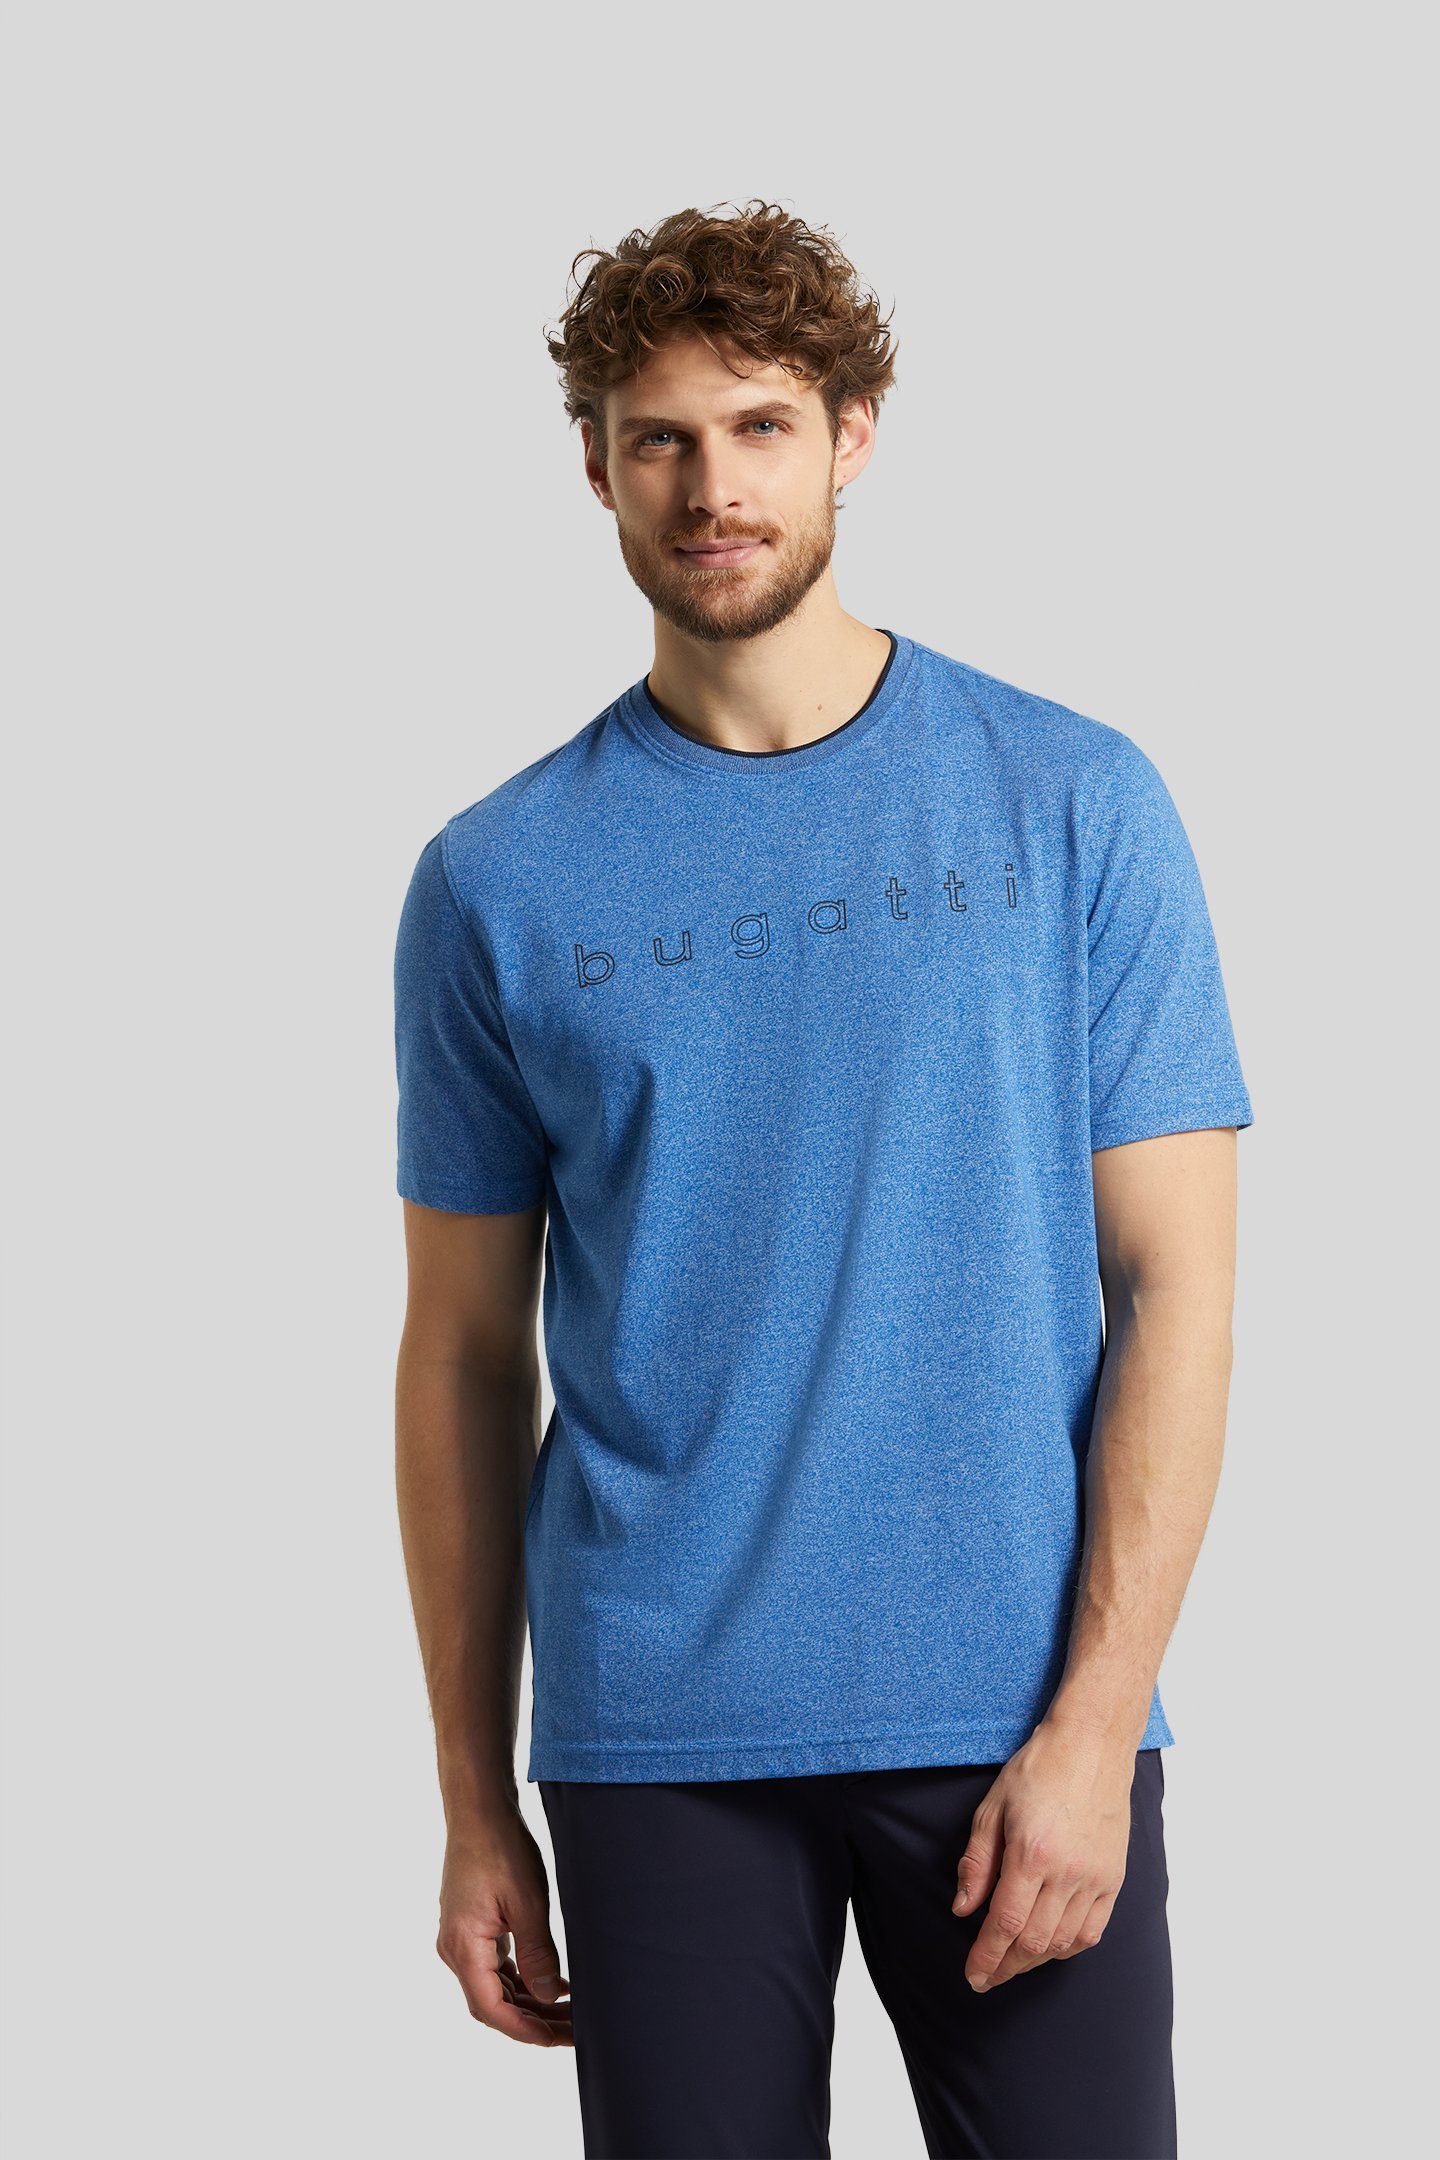 bugatti T-Shirt mit großem bugatti Logo-Print blau